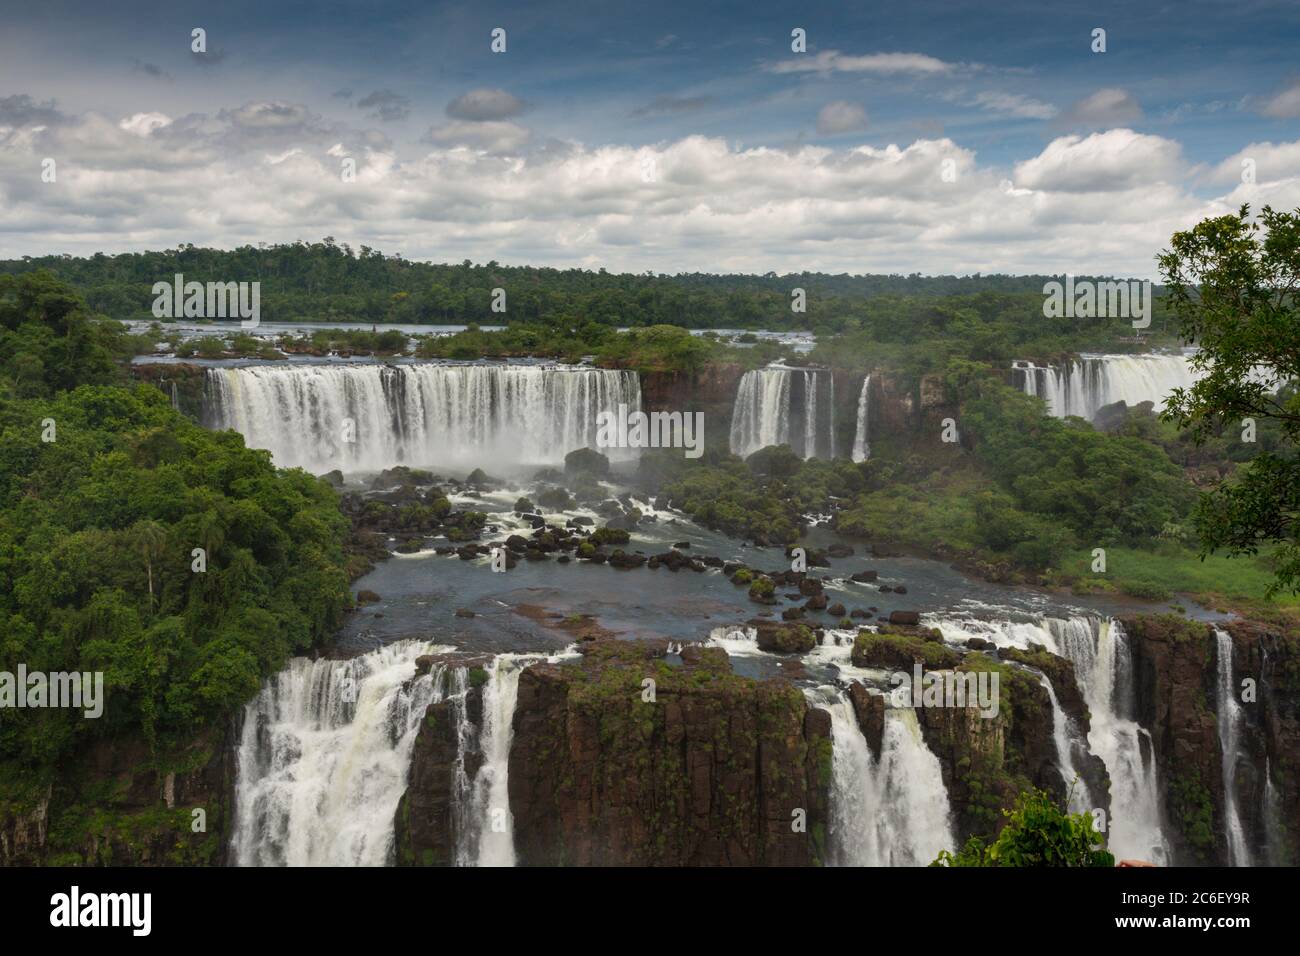 Cascate di Iguazu / Cataratas del Iguazú nella provincia di Misiones, Argentina Foto Stock